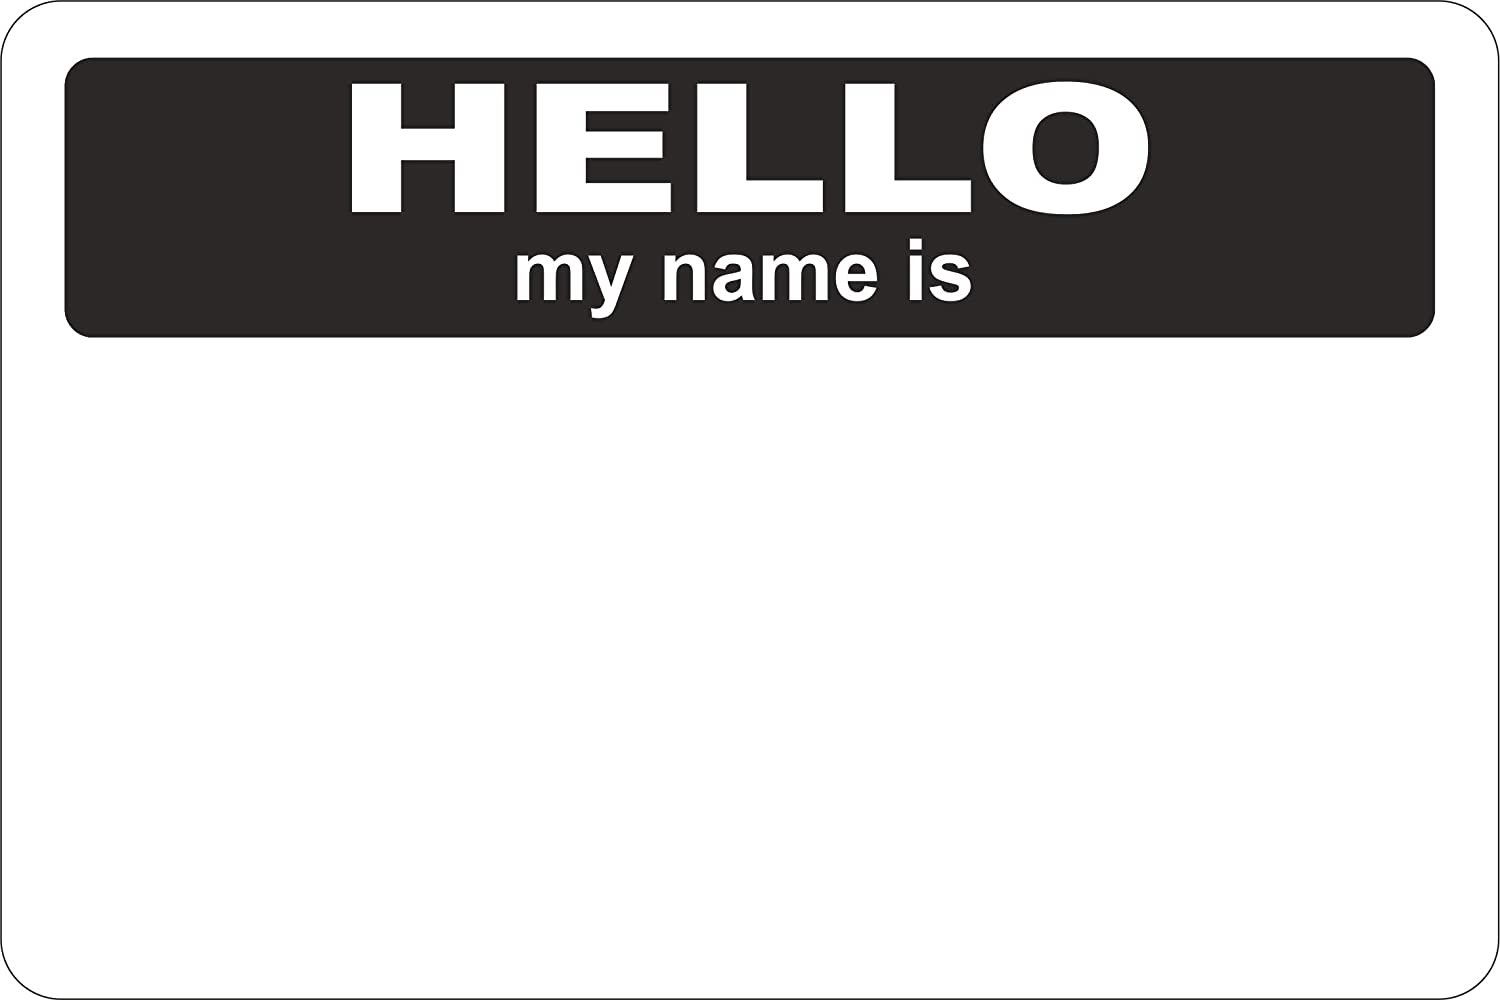 Стикеры ис. Стикеры hello my name is. Наклейки hello my name. Наклейка my name is. Стикеры hello my name is черные.